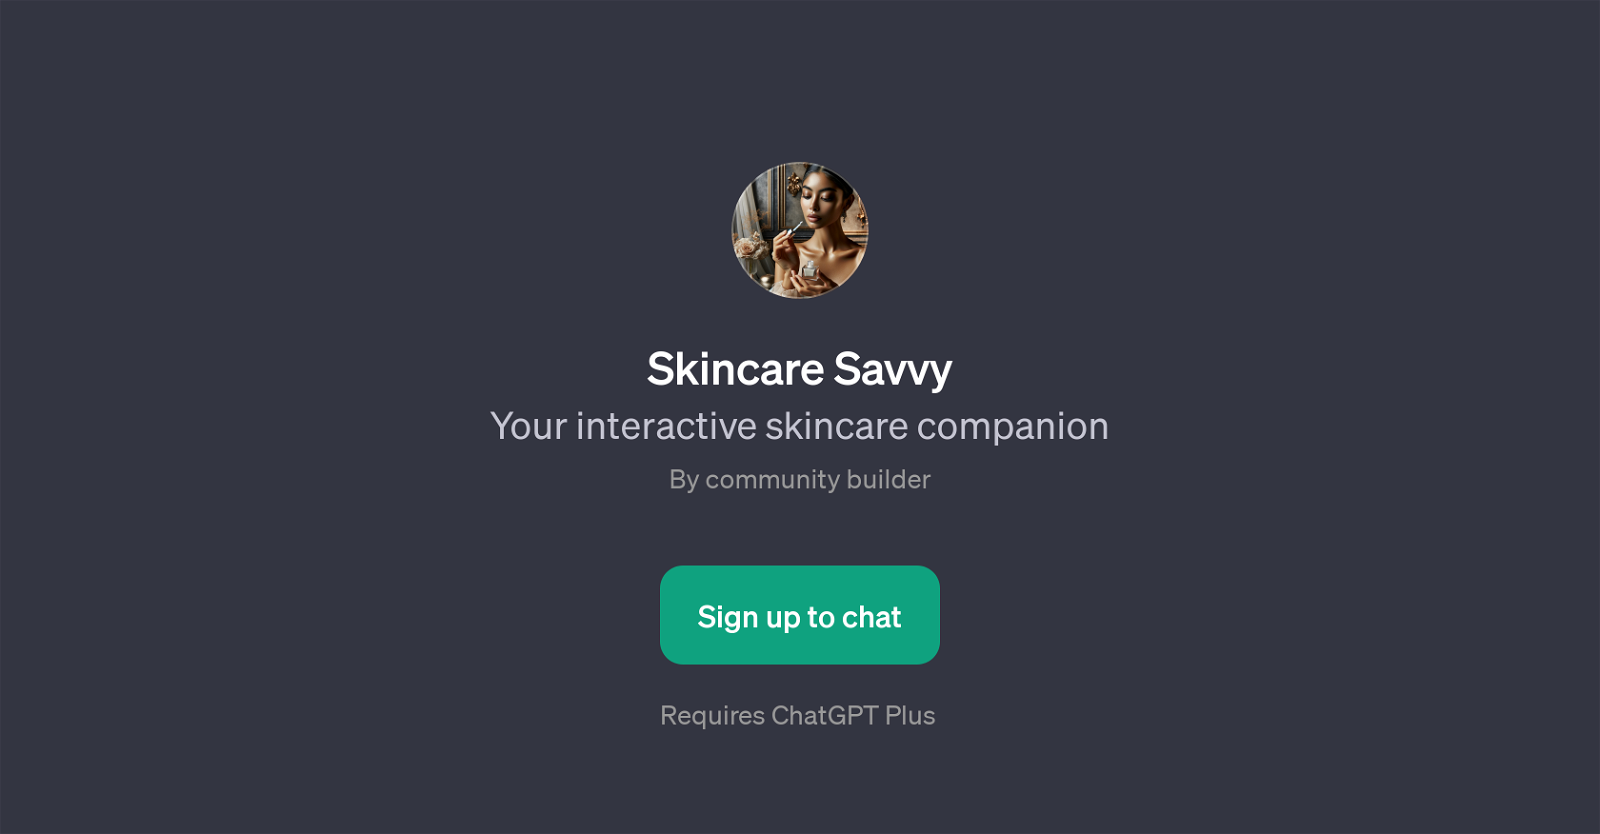 Skincare Savvy website